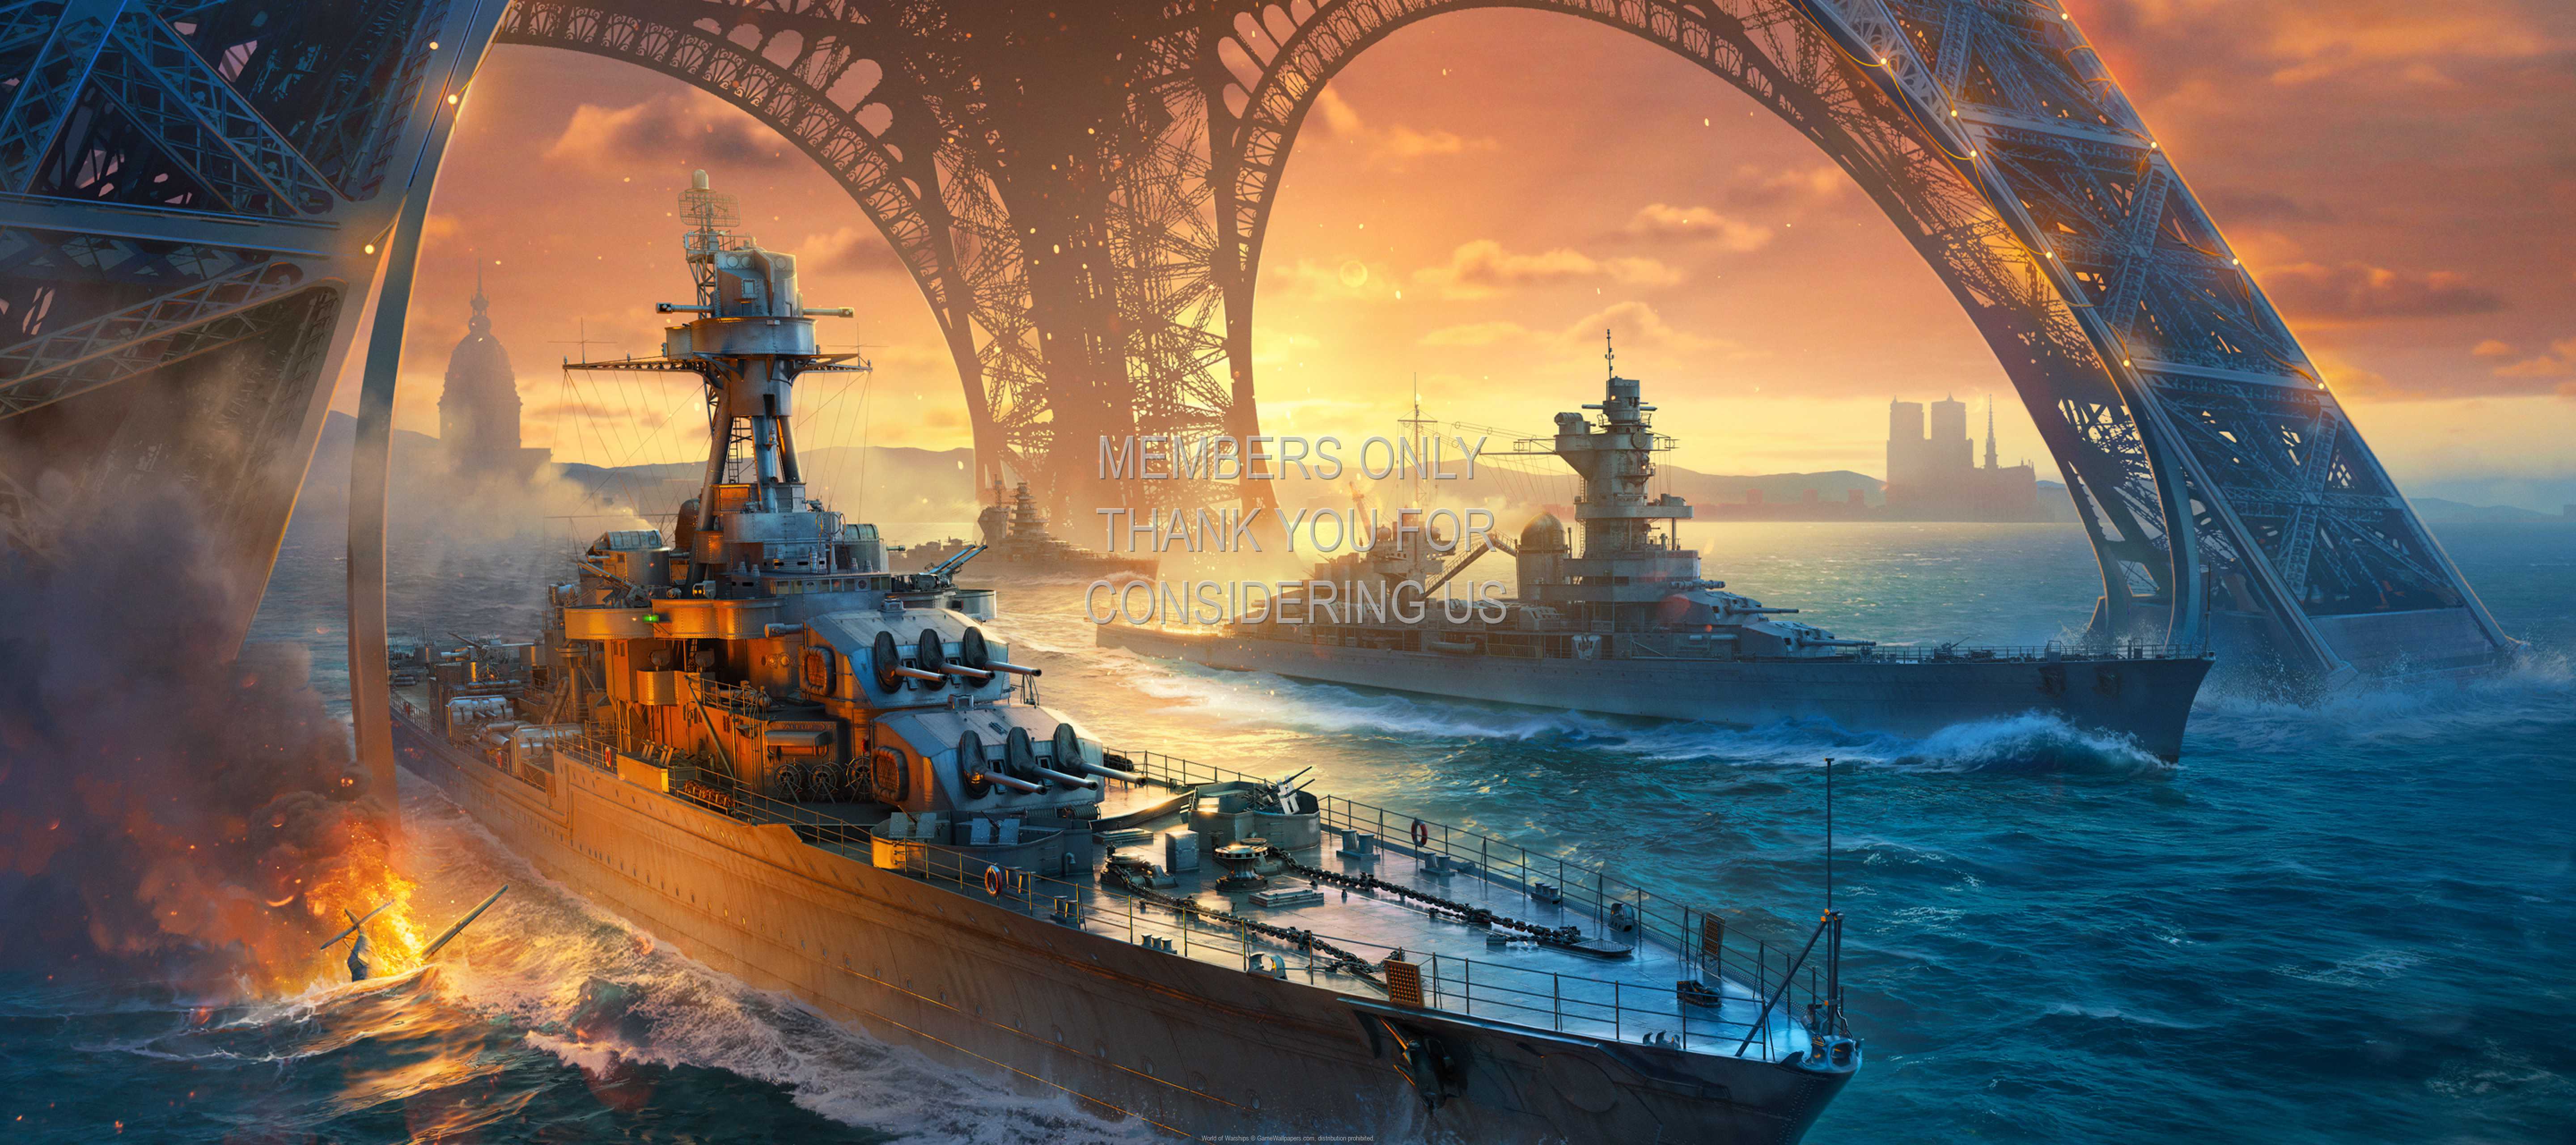 World of Warships 1440p%20Horizontal Mobile wallpaper or background 20